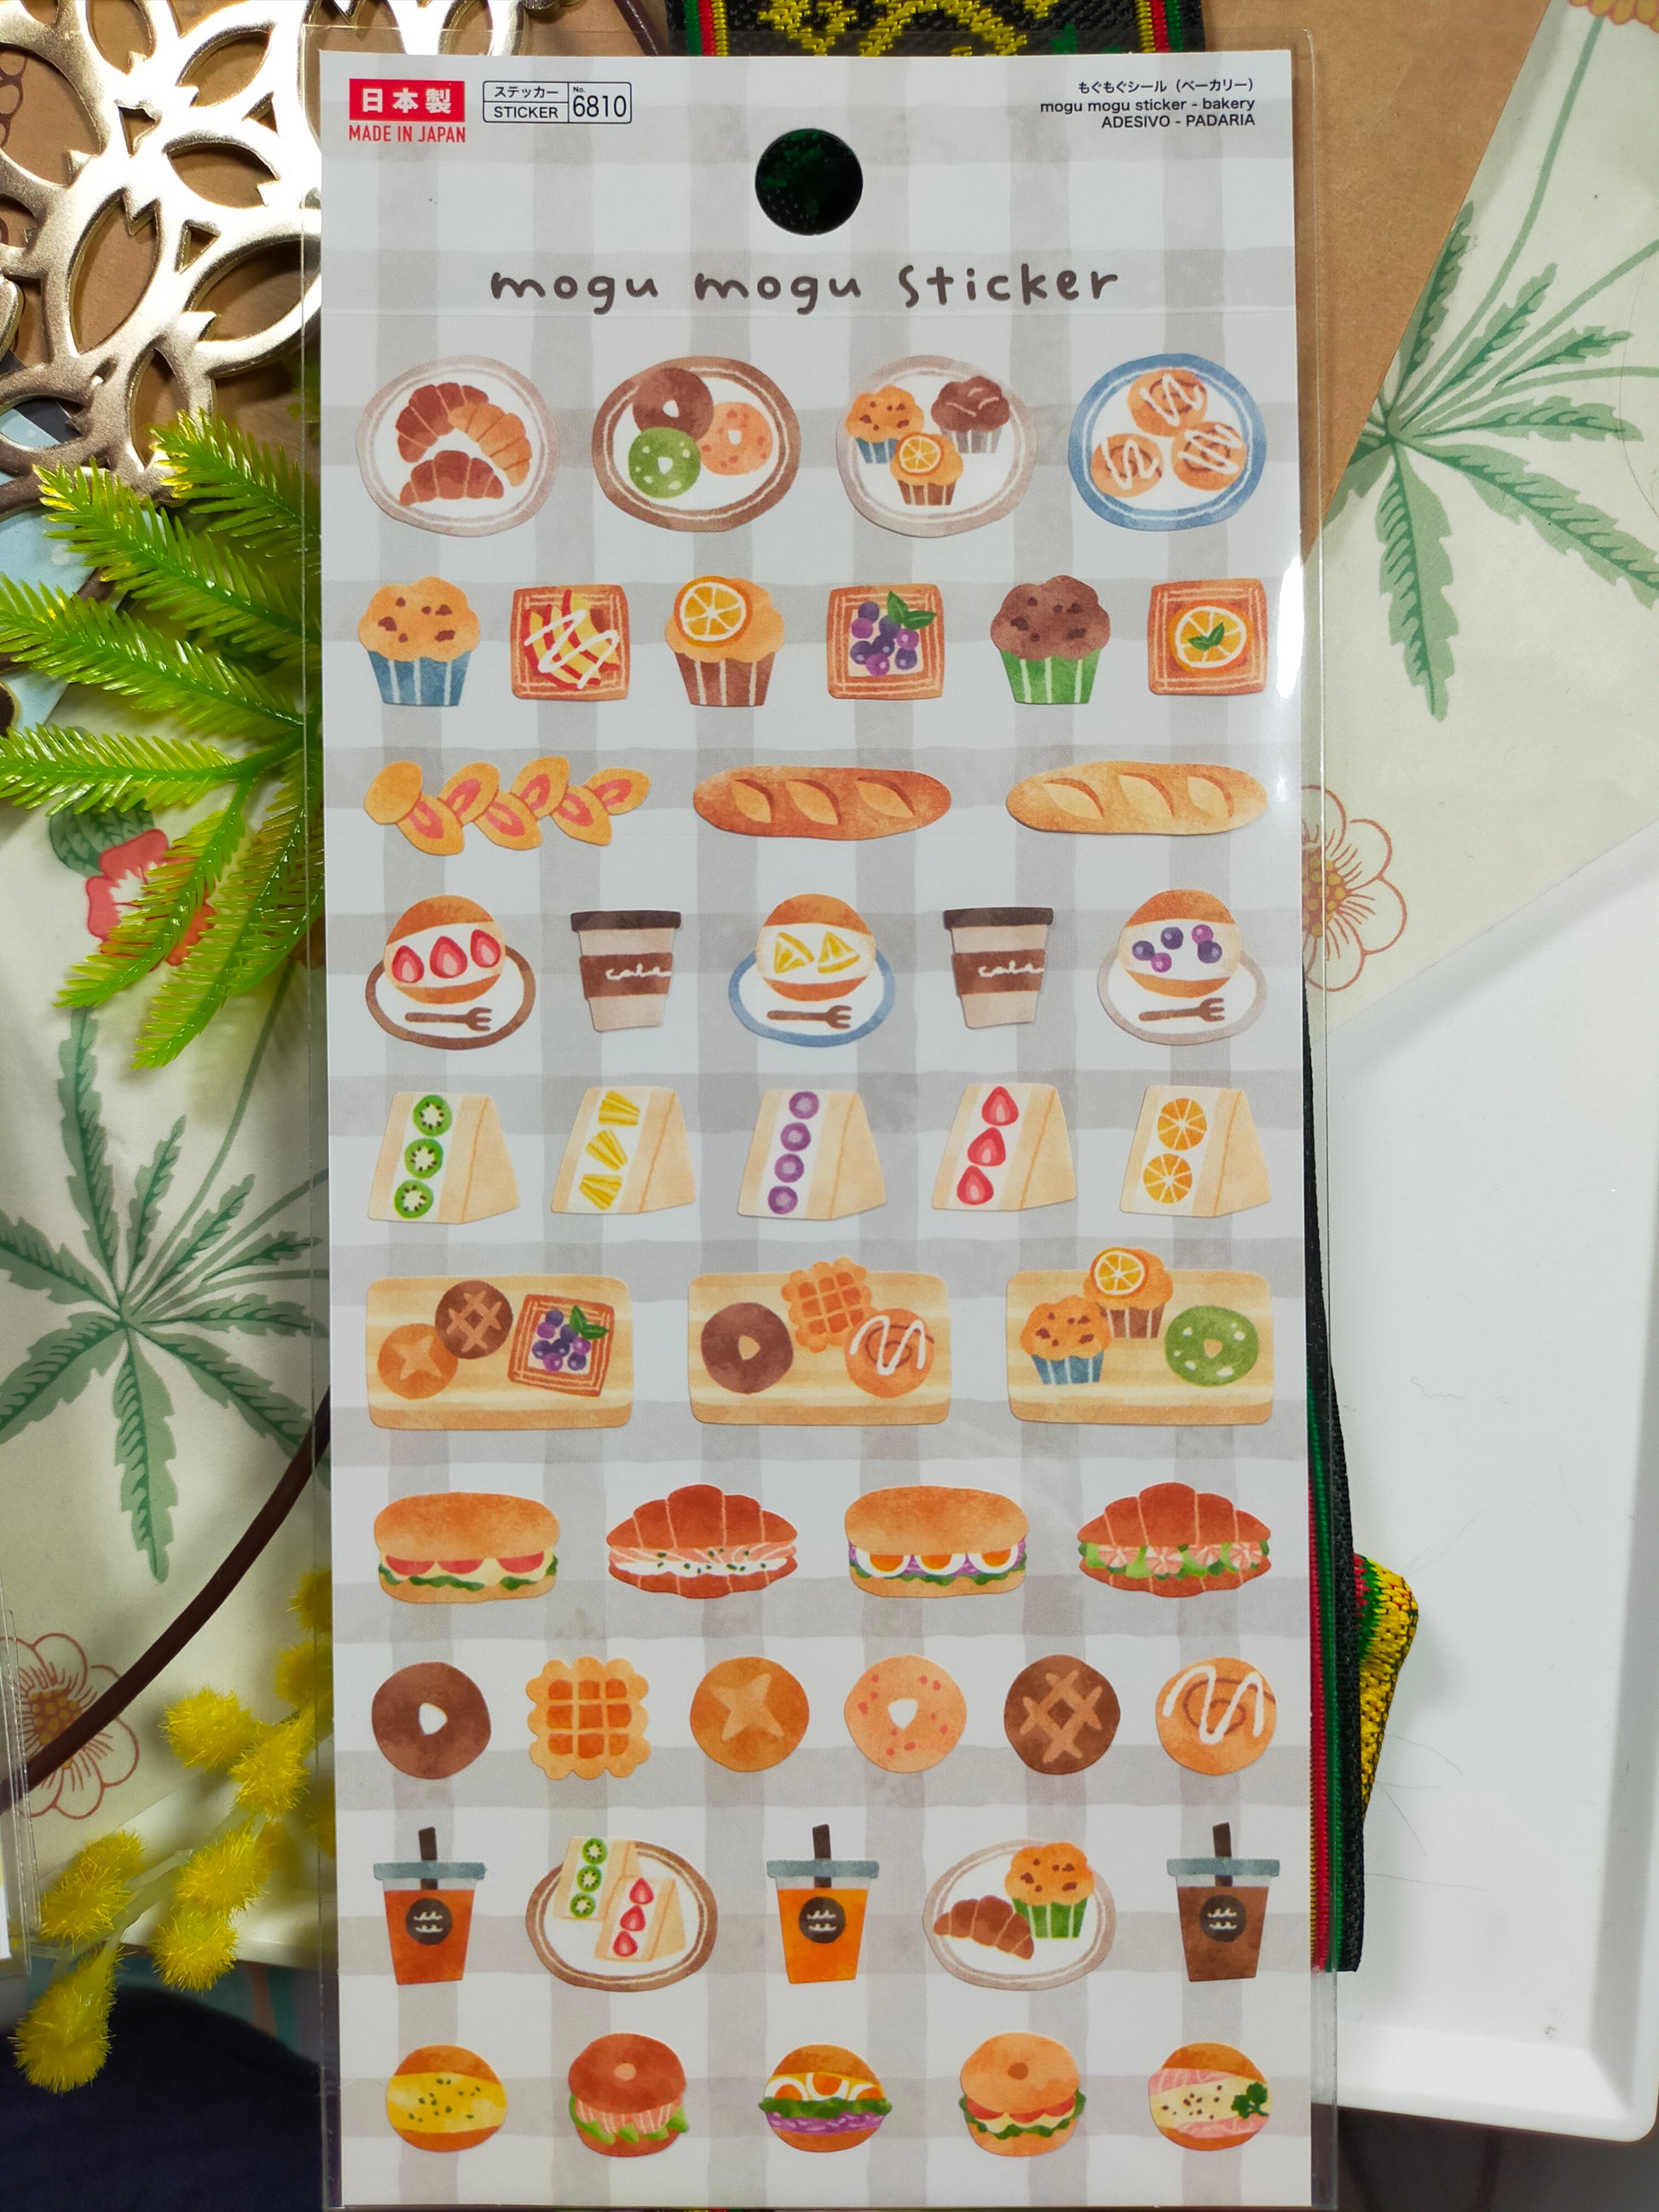 Mogu Mogu Stickers_ Cakes / Chinese / Food / Cafe Menu / Bread ...